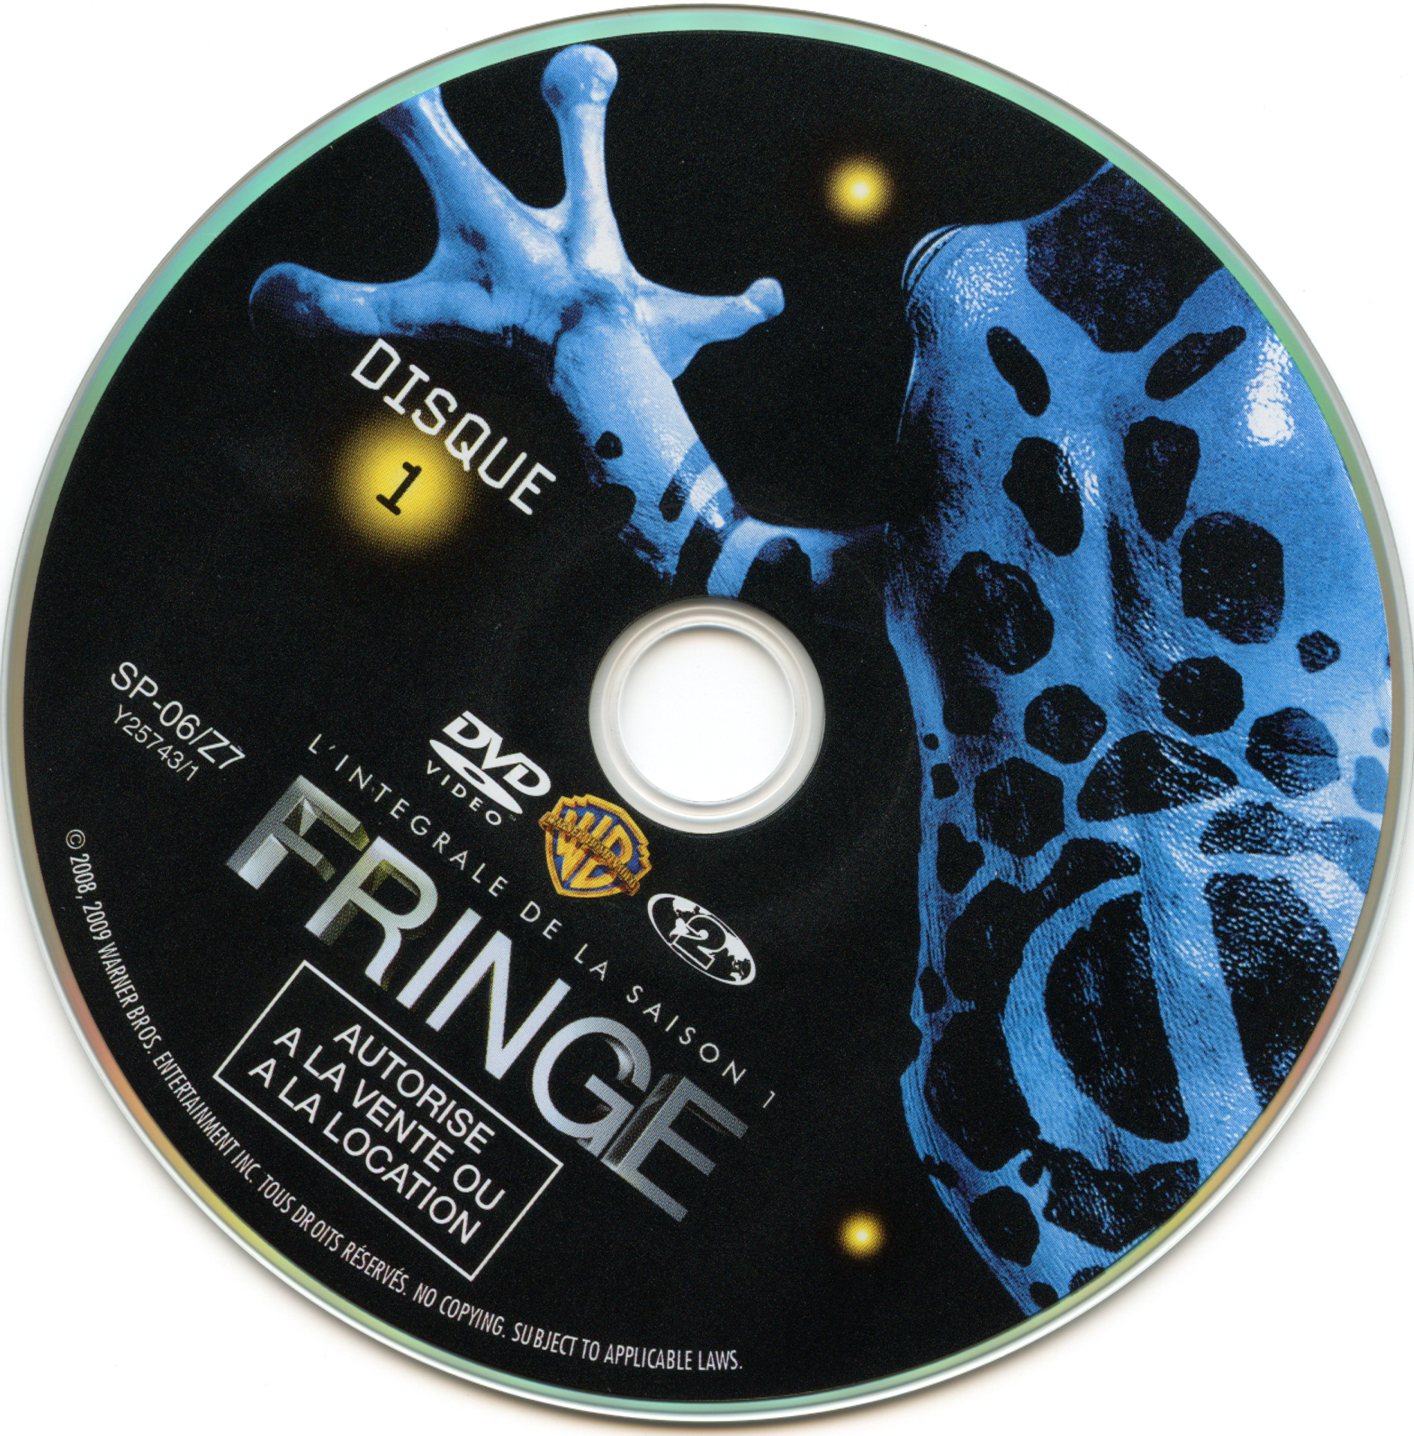 Fringe Saison 1 DVD 1